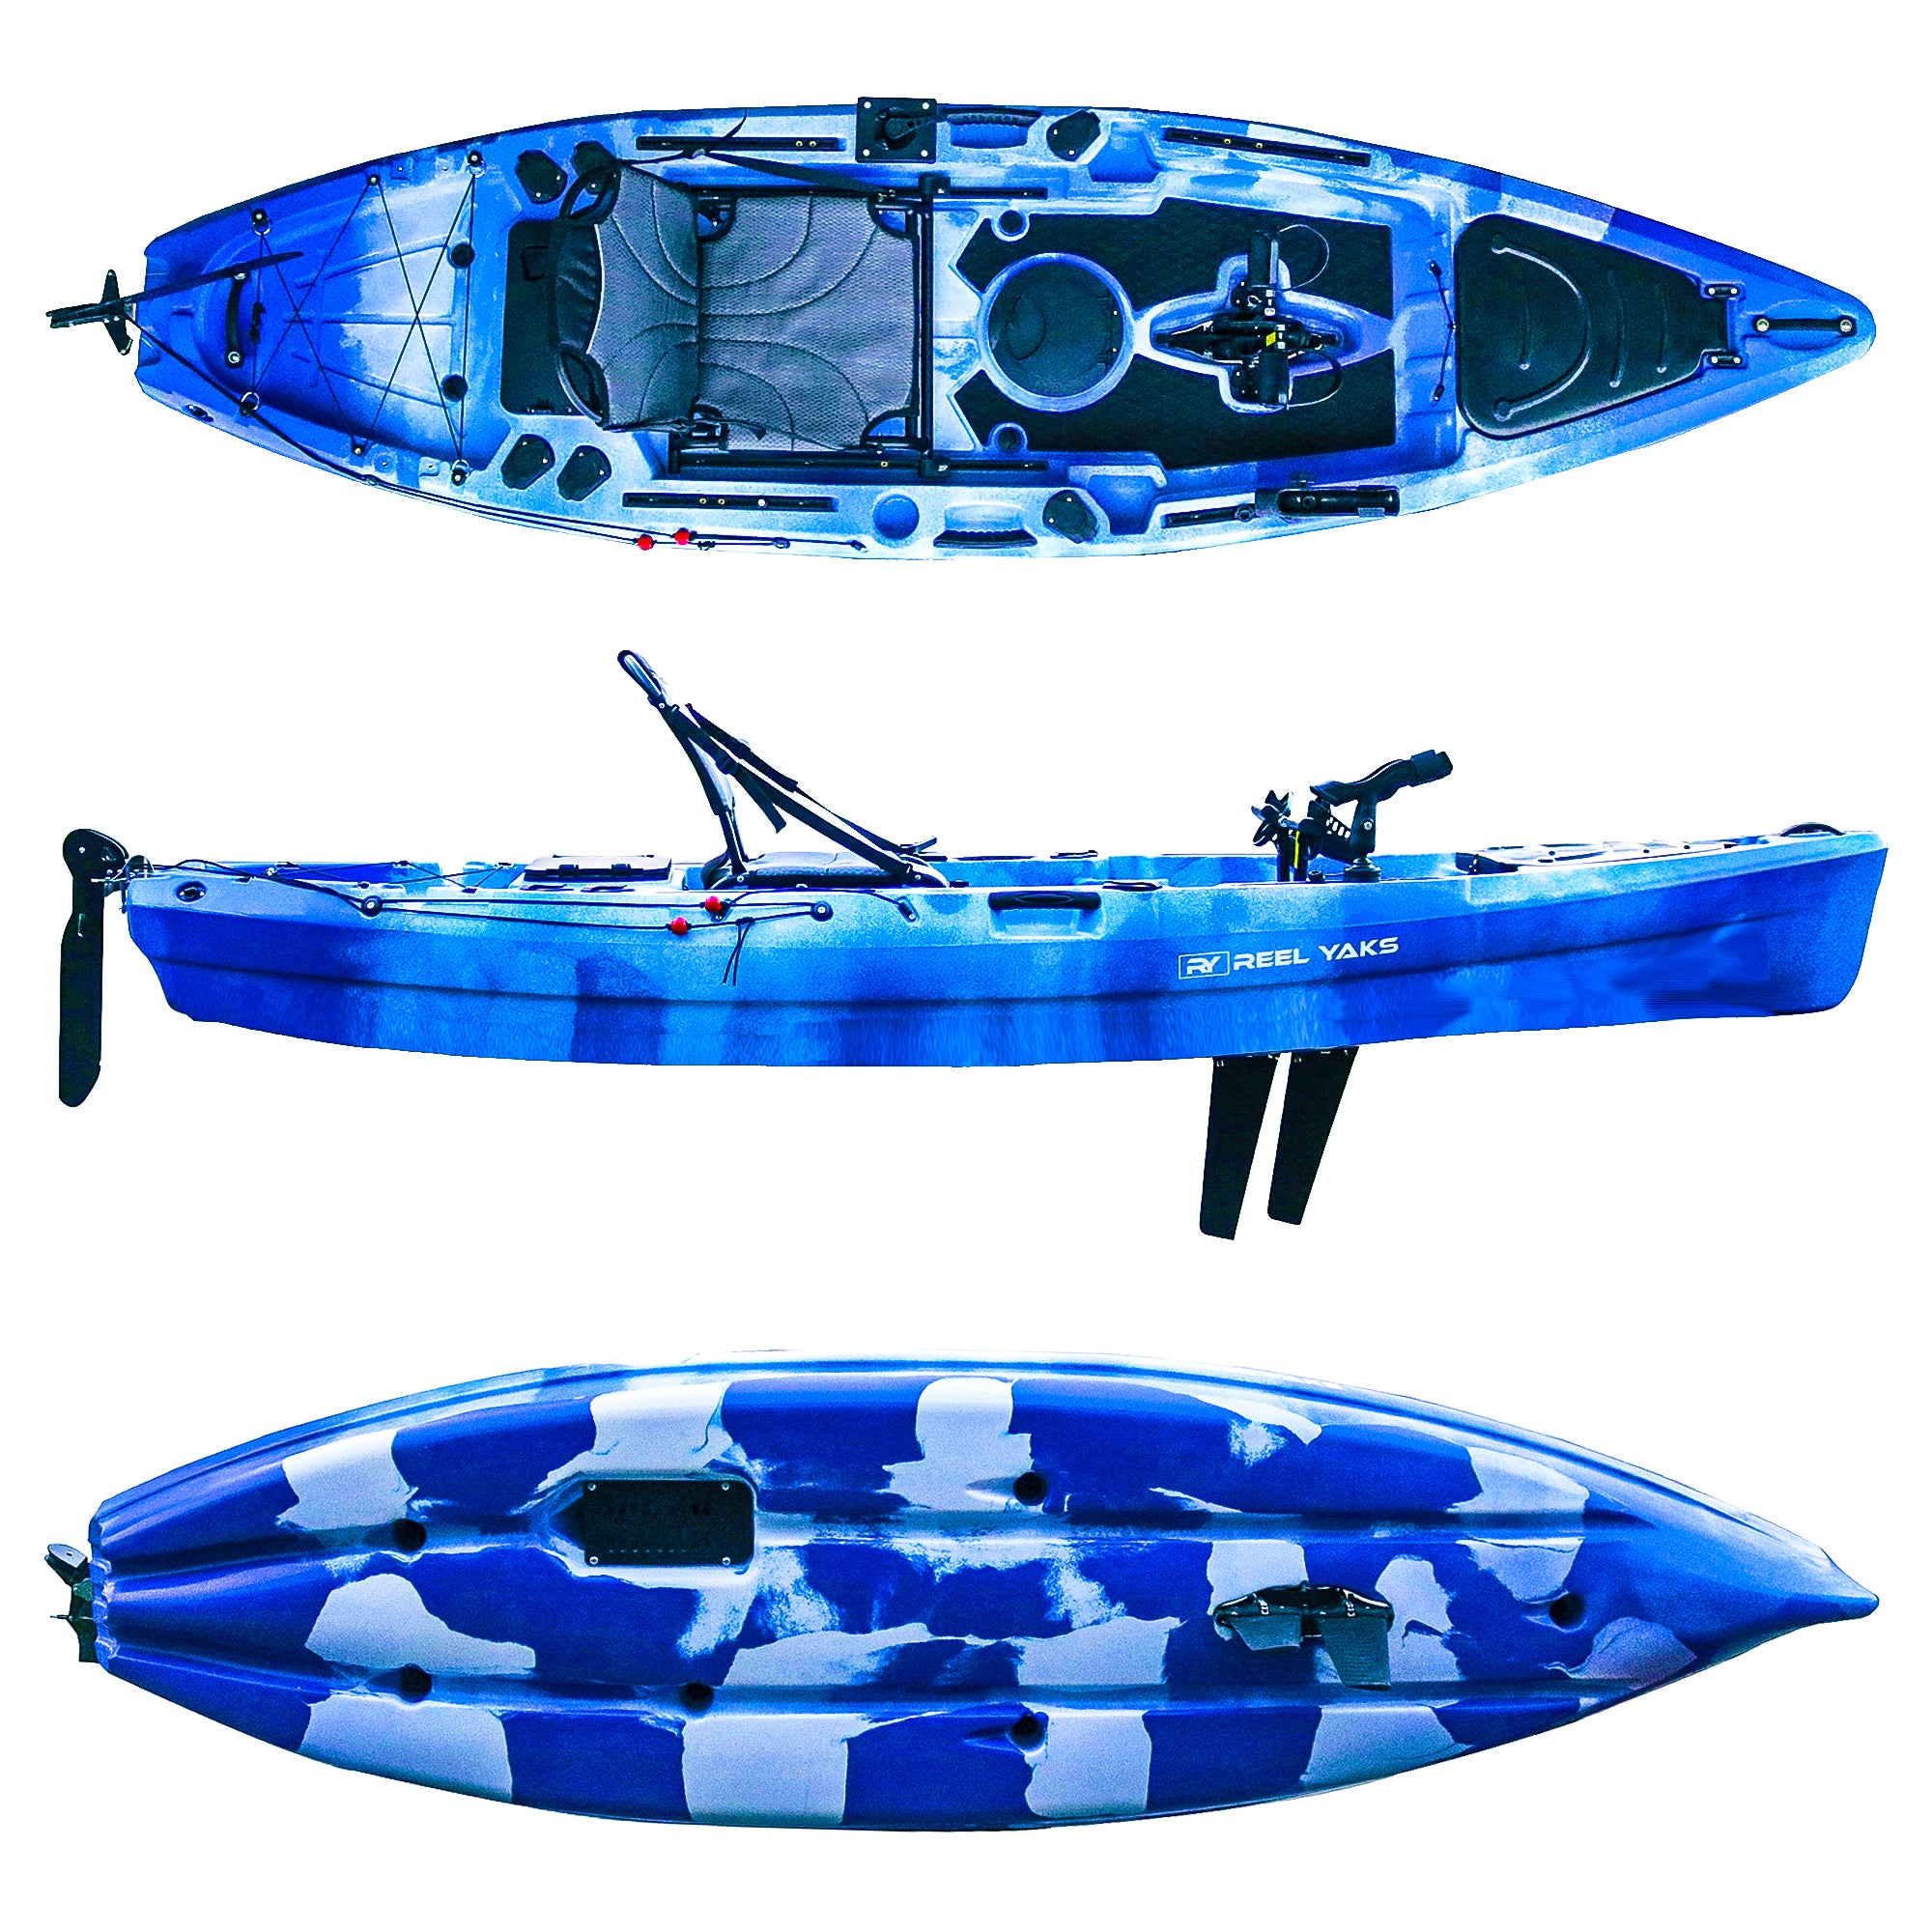 The Original 11' Fin Drive Pedal Fishing Kayak